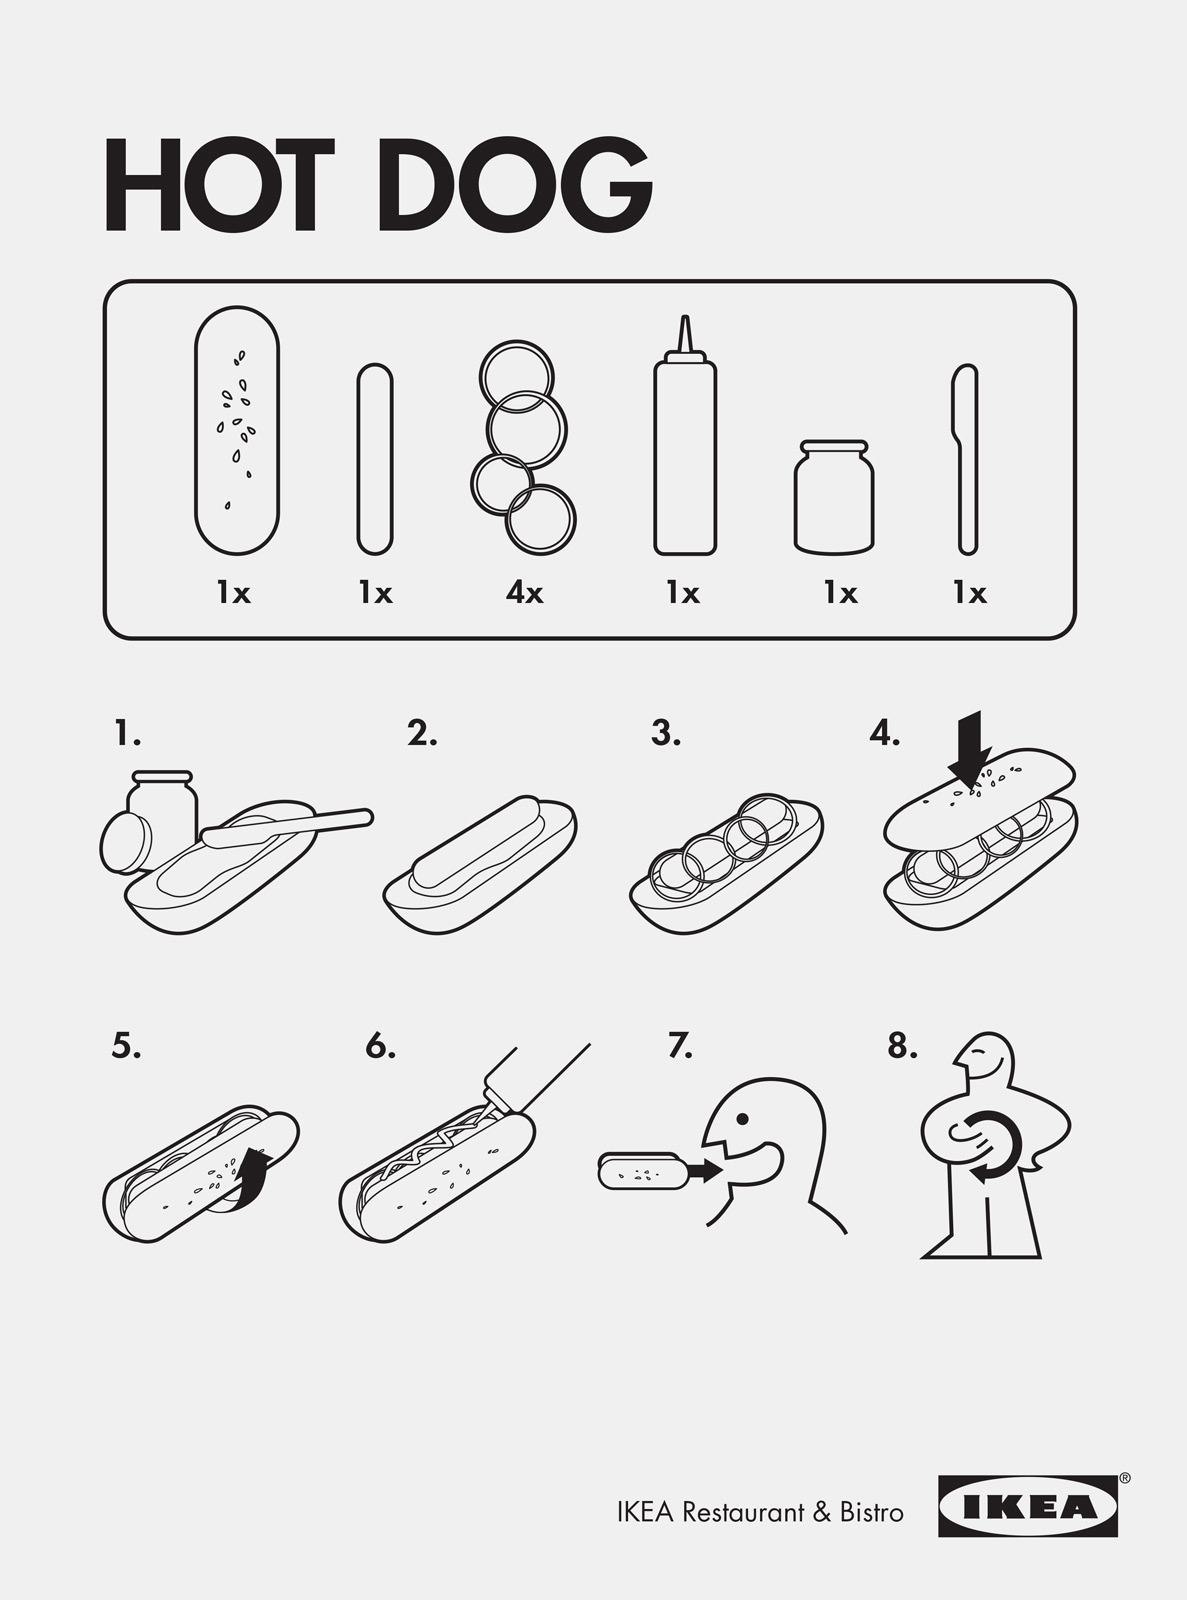 IKEA_poster_hotdog7124213174rEbW